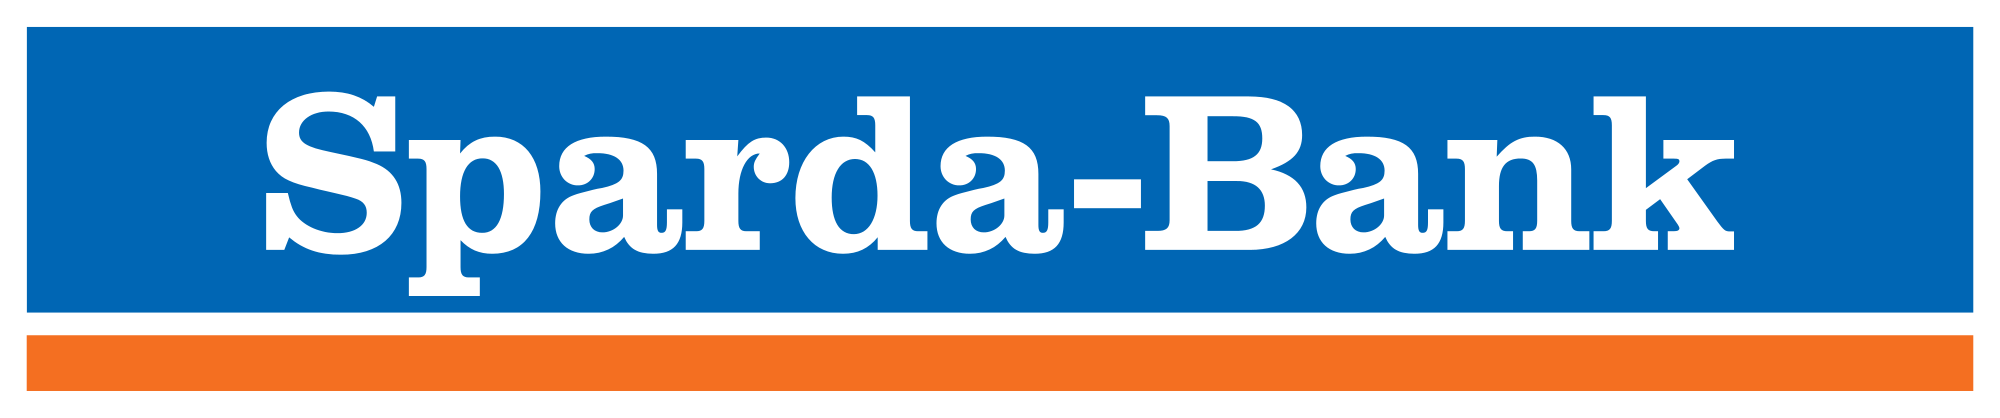 Sparda Bank Brand Logo